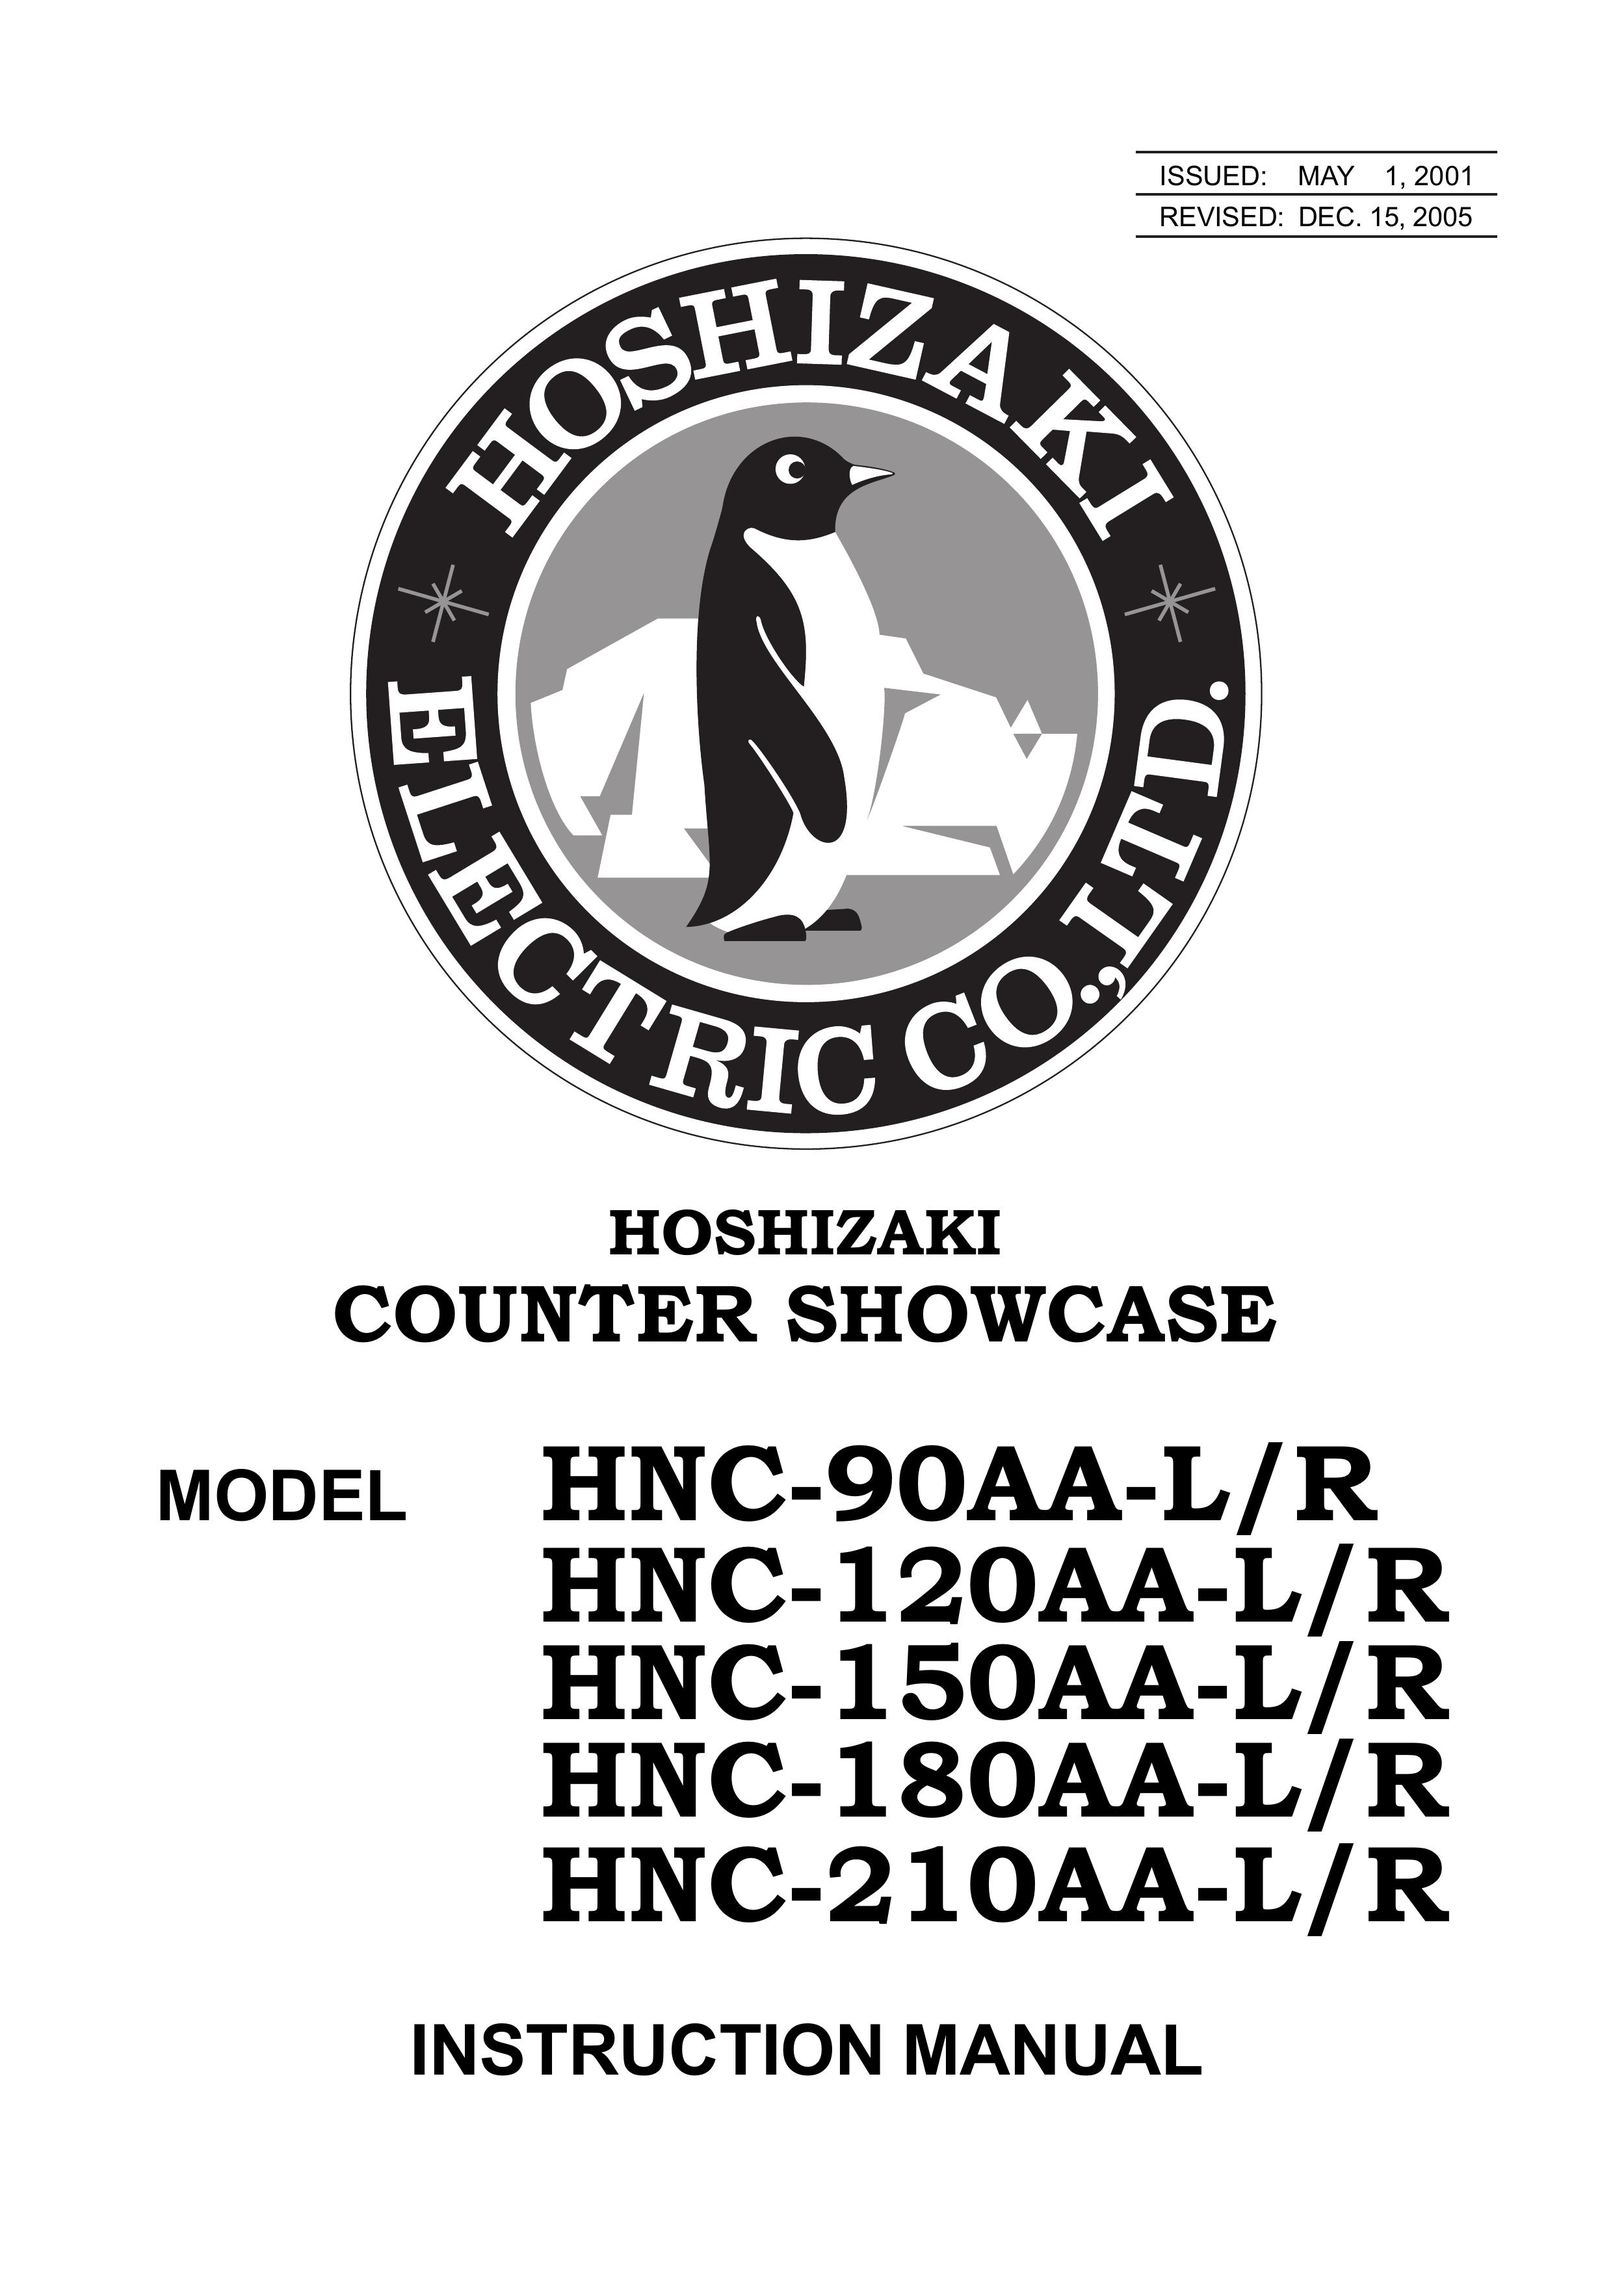 Hoshizaki HNC-210AA-L/R Freezer User Manual